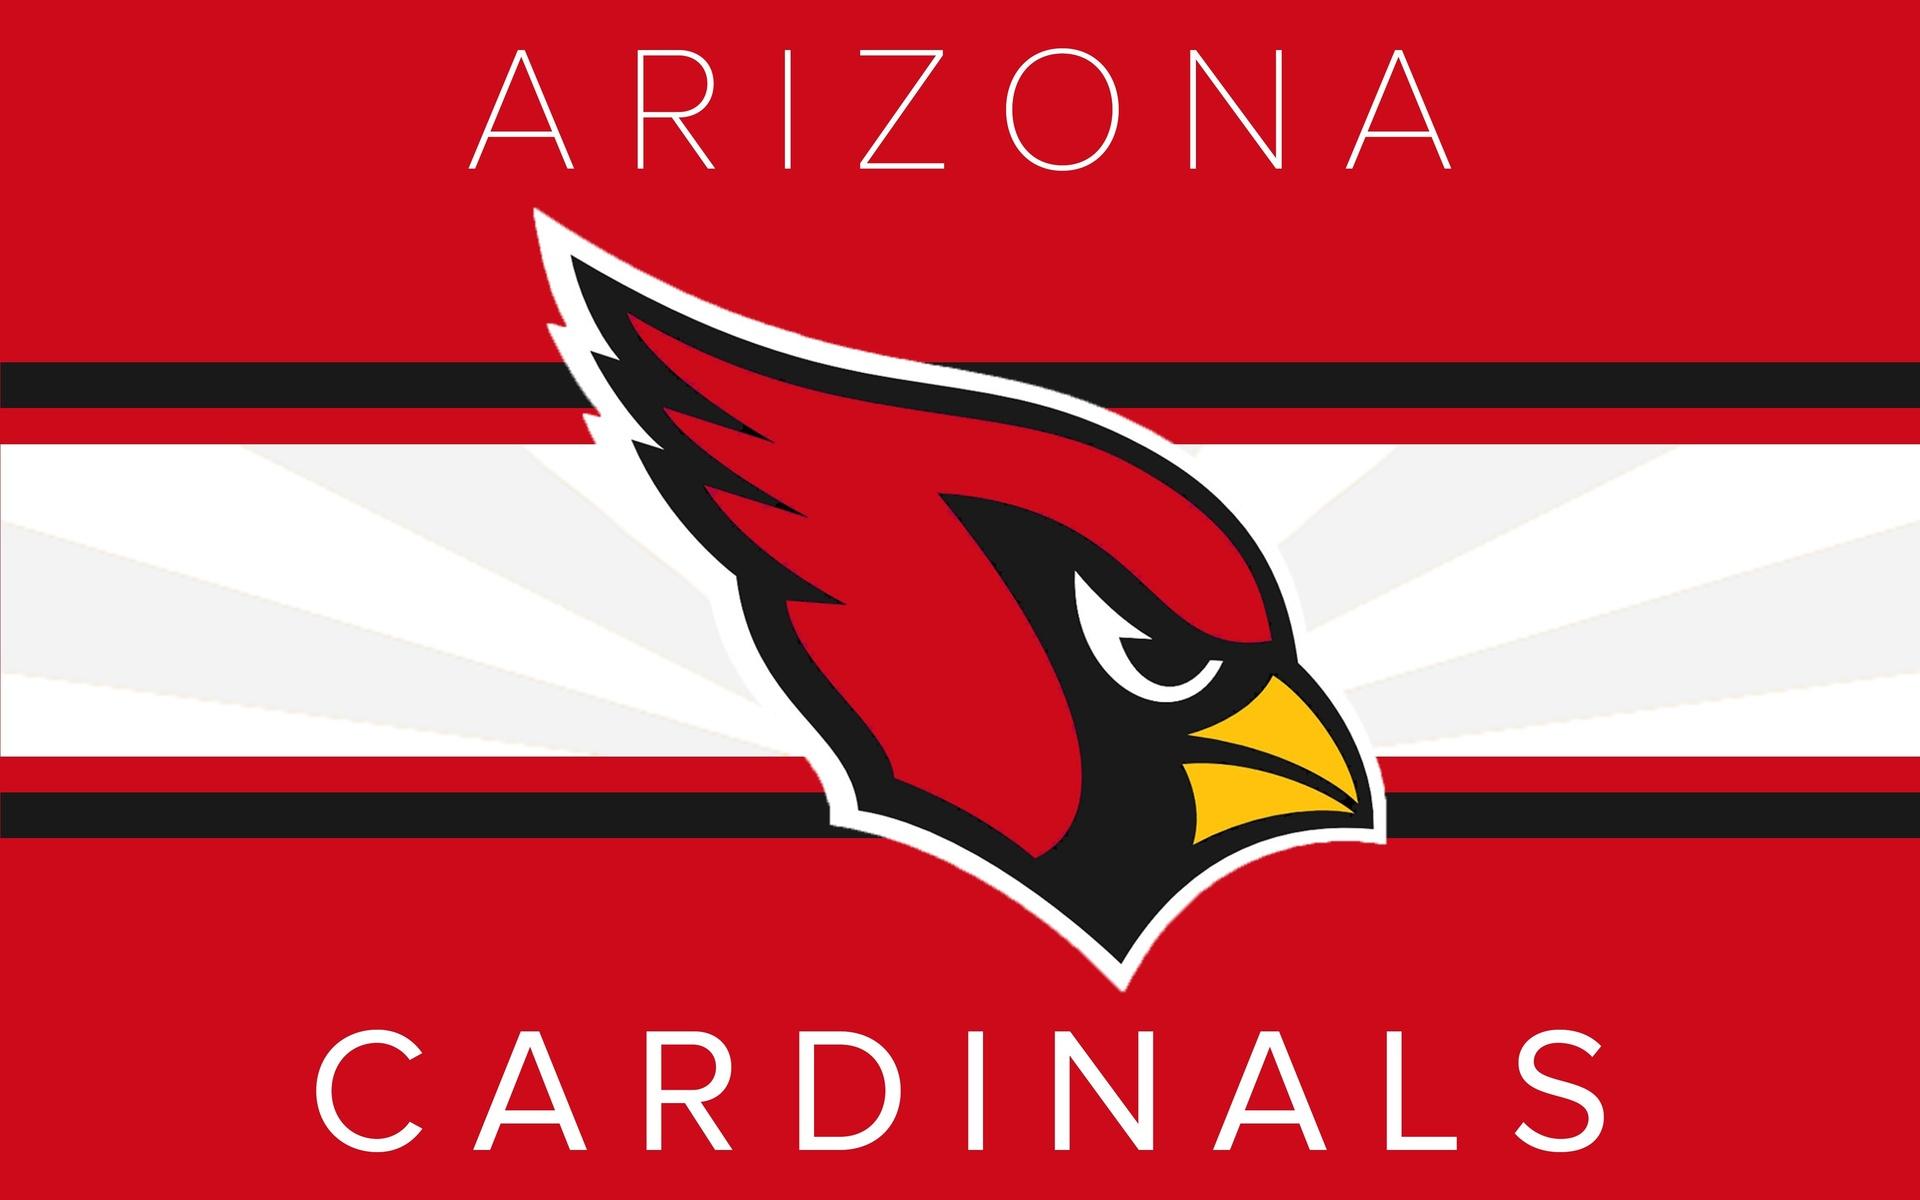 Arizona Cardinals Background